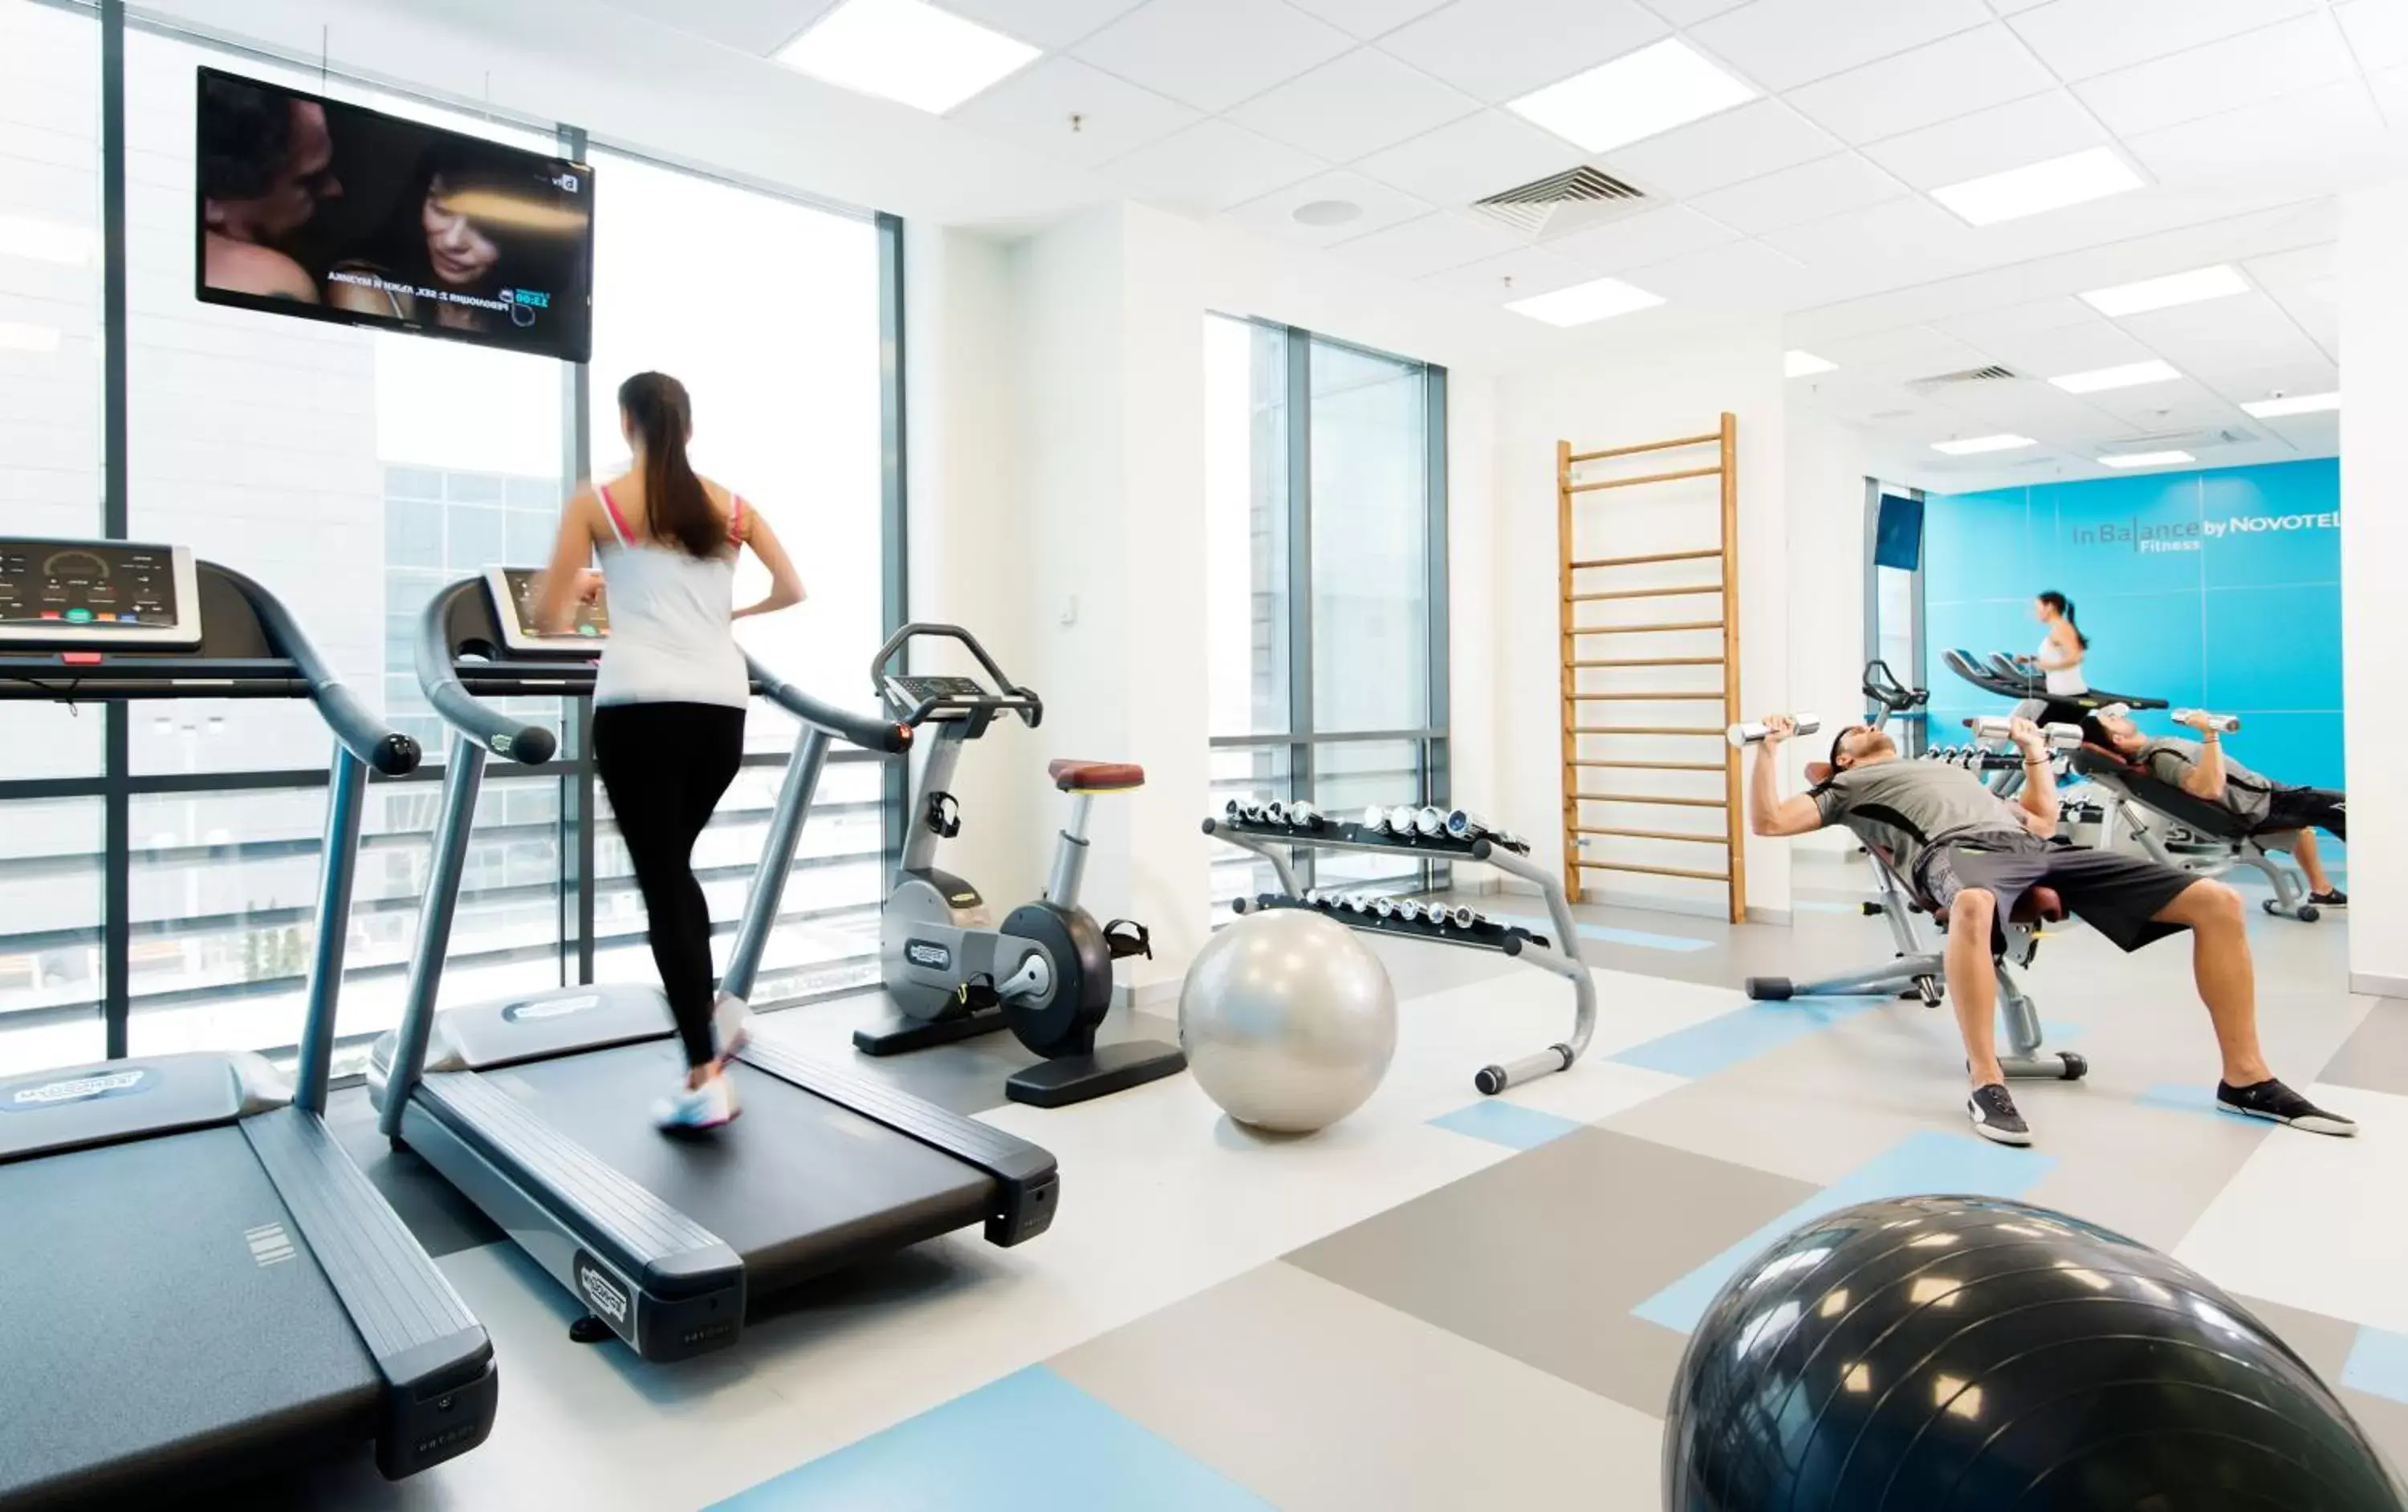 Fitness centre/facilities, Fitness Center/Facilities in Novotel Sofia